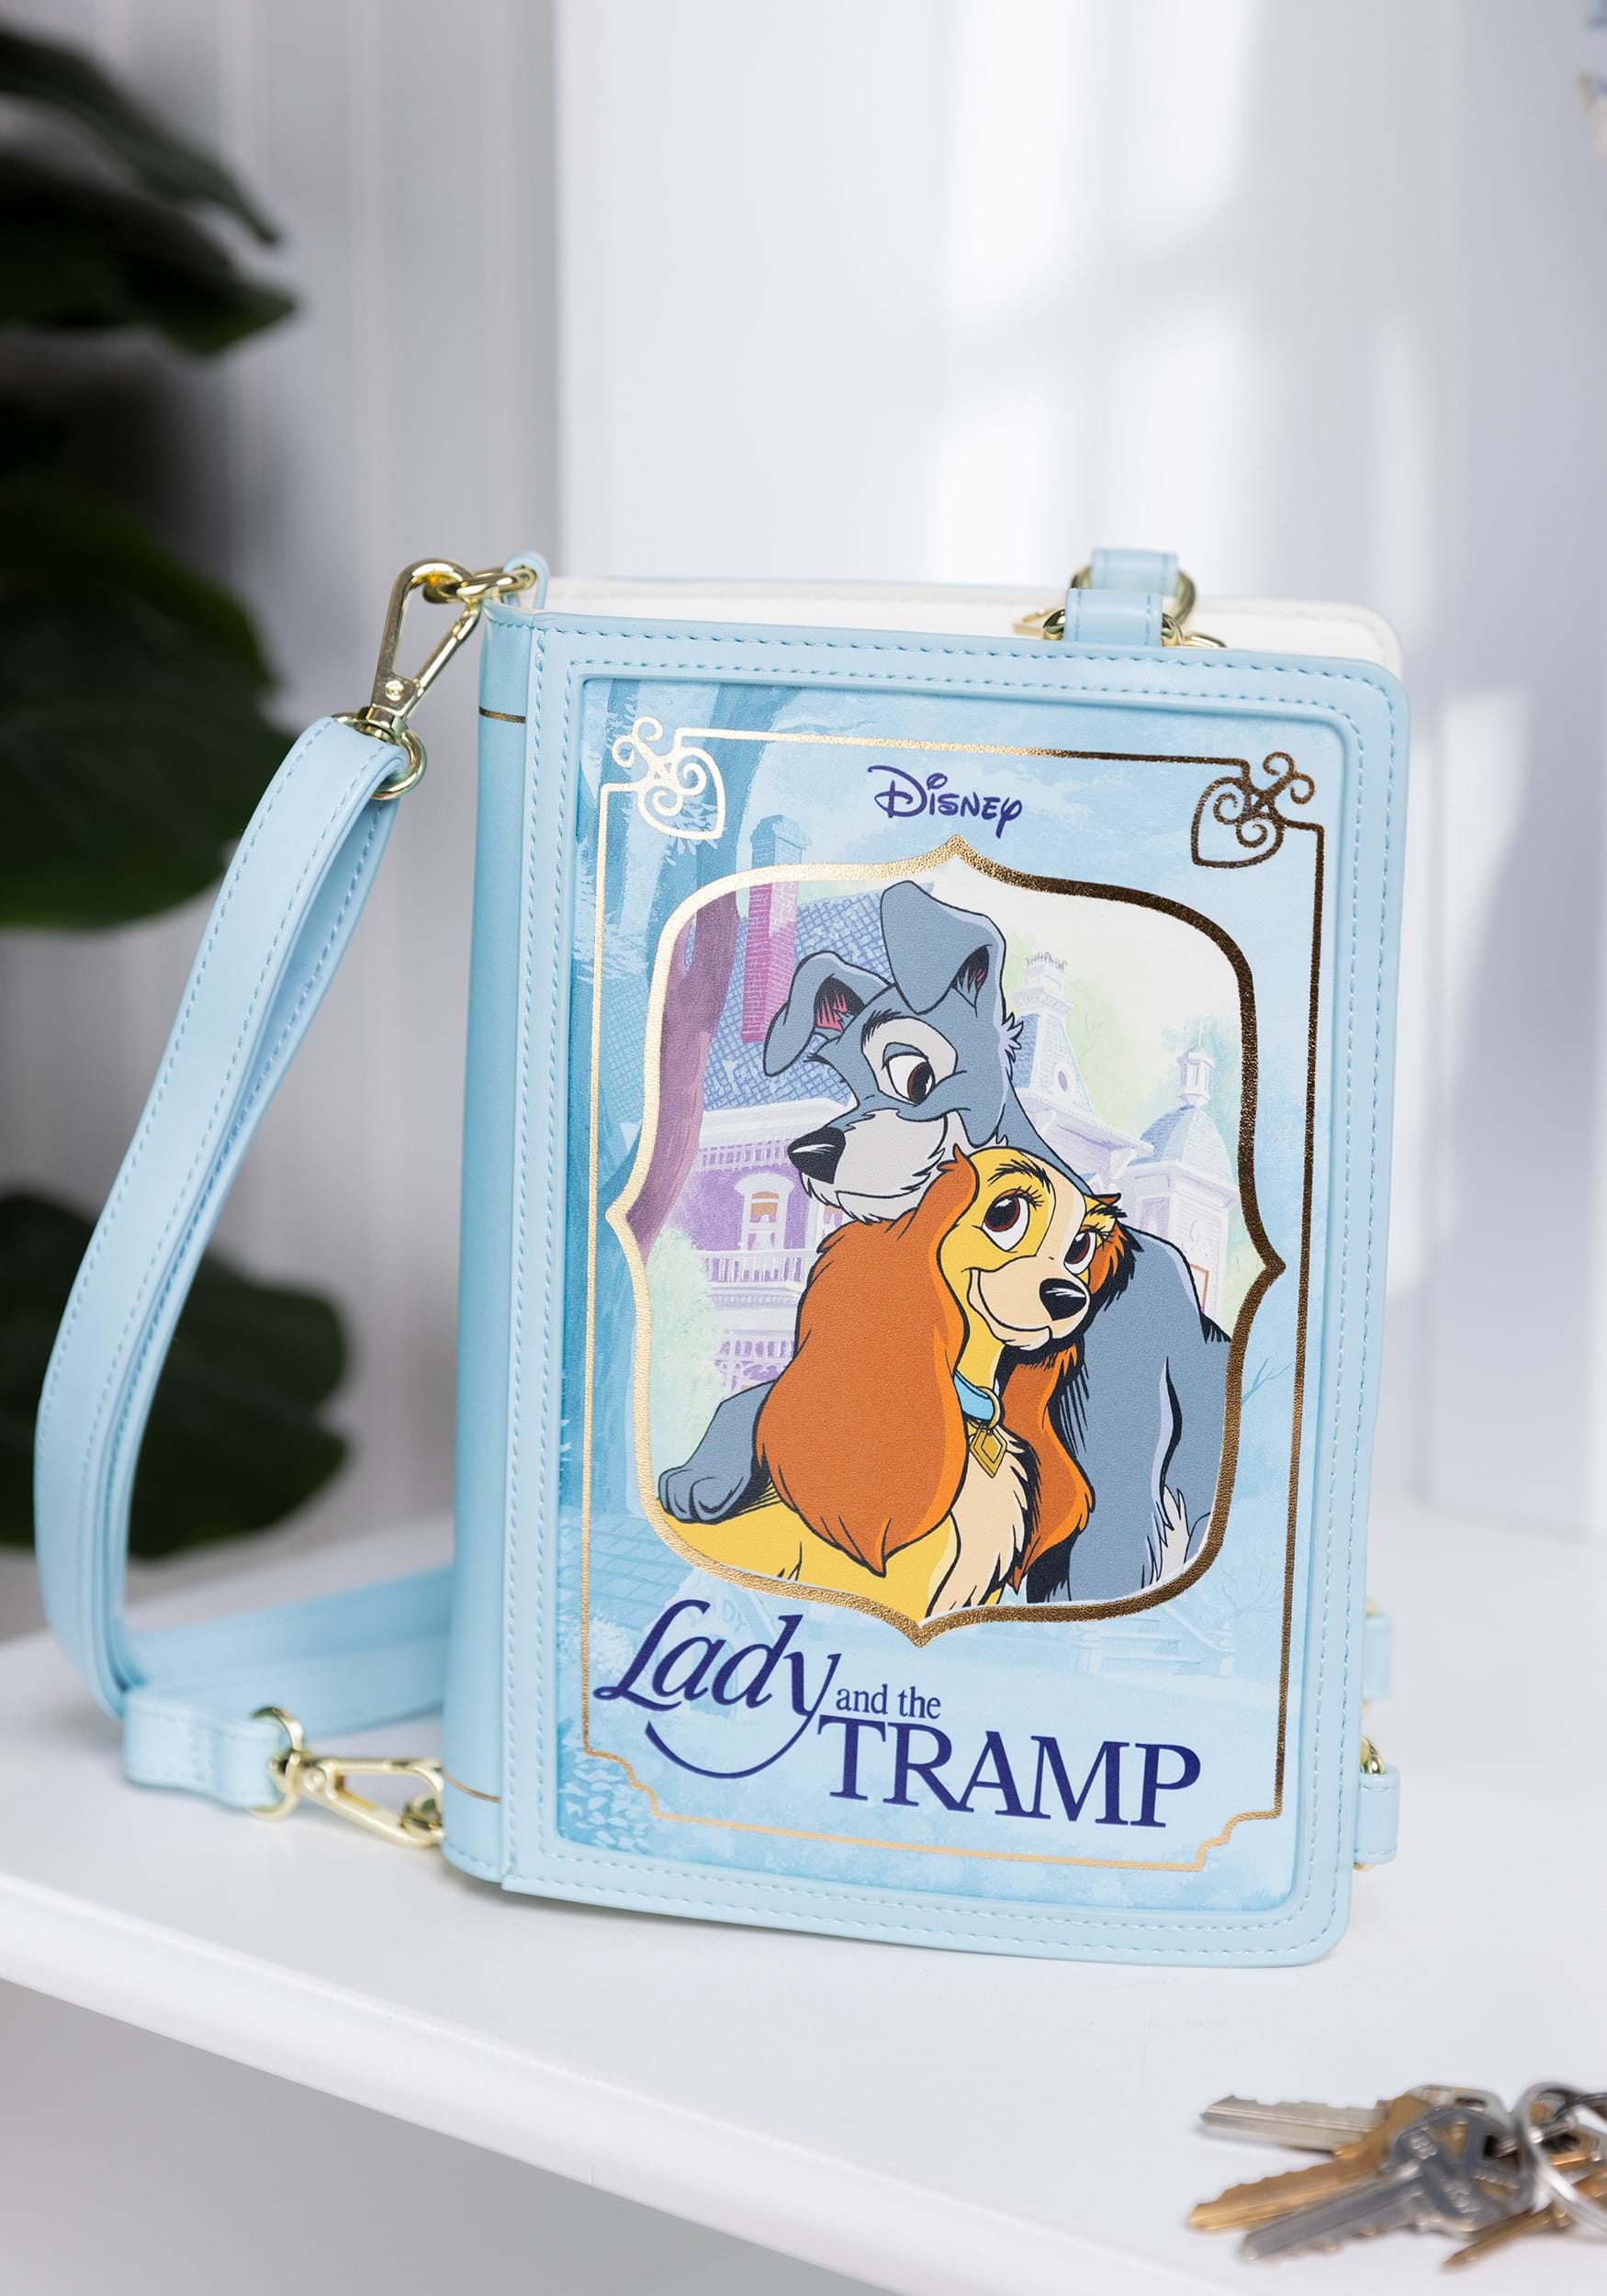 Disney: Princess Books Classics Loungefly Crossbody Bag